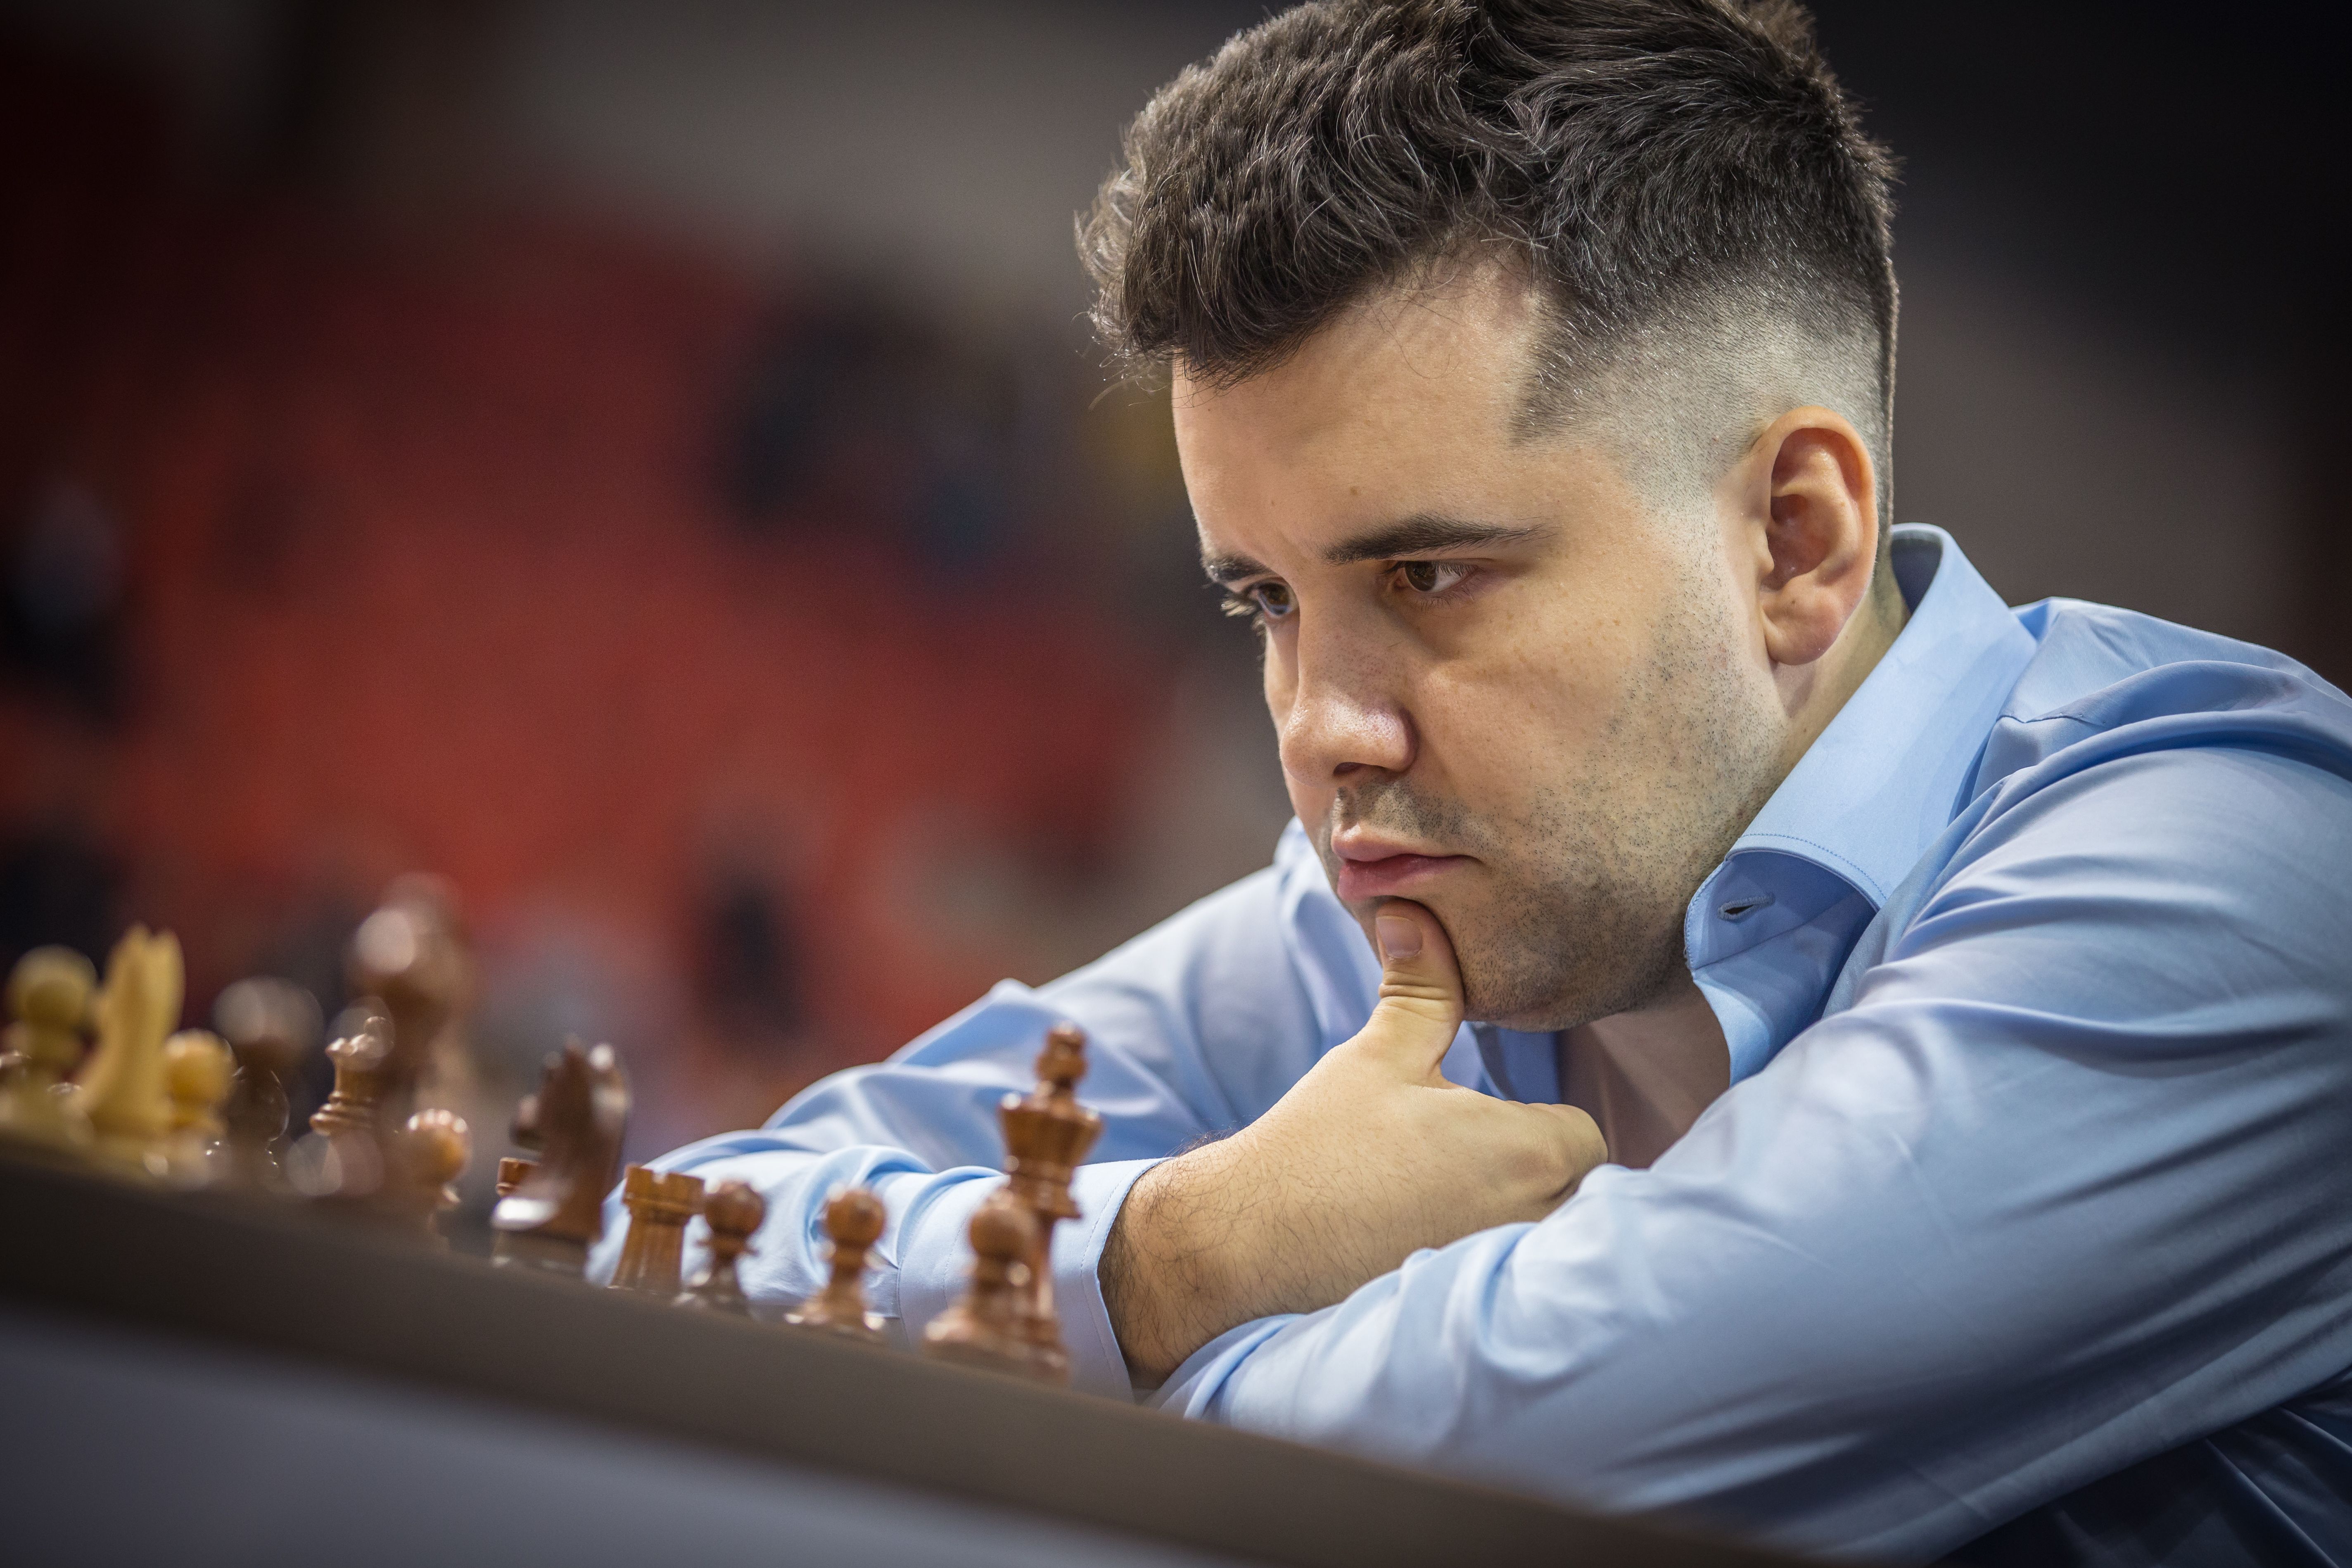 Rapid Chess Championship 2022 do : Informações